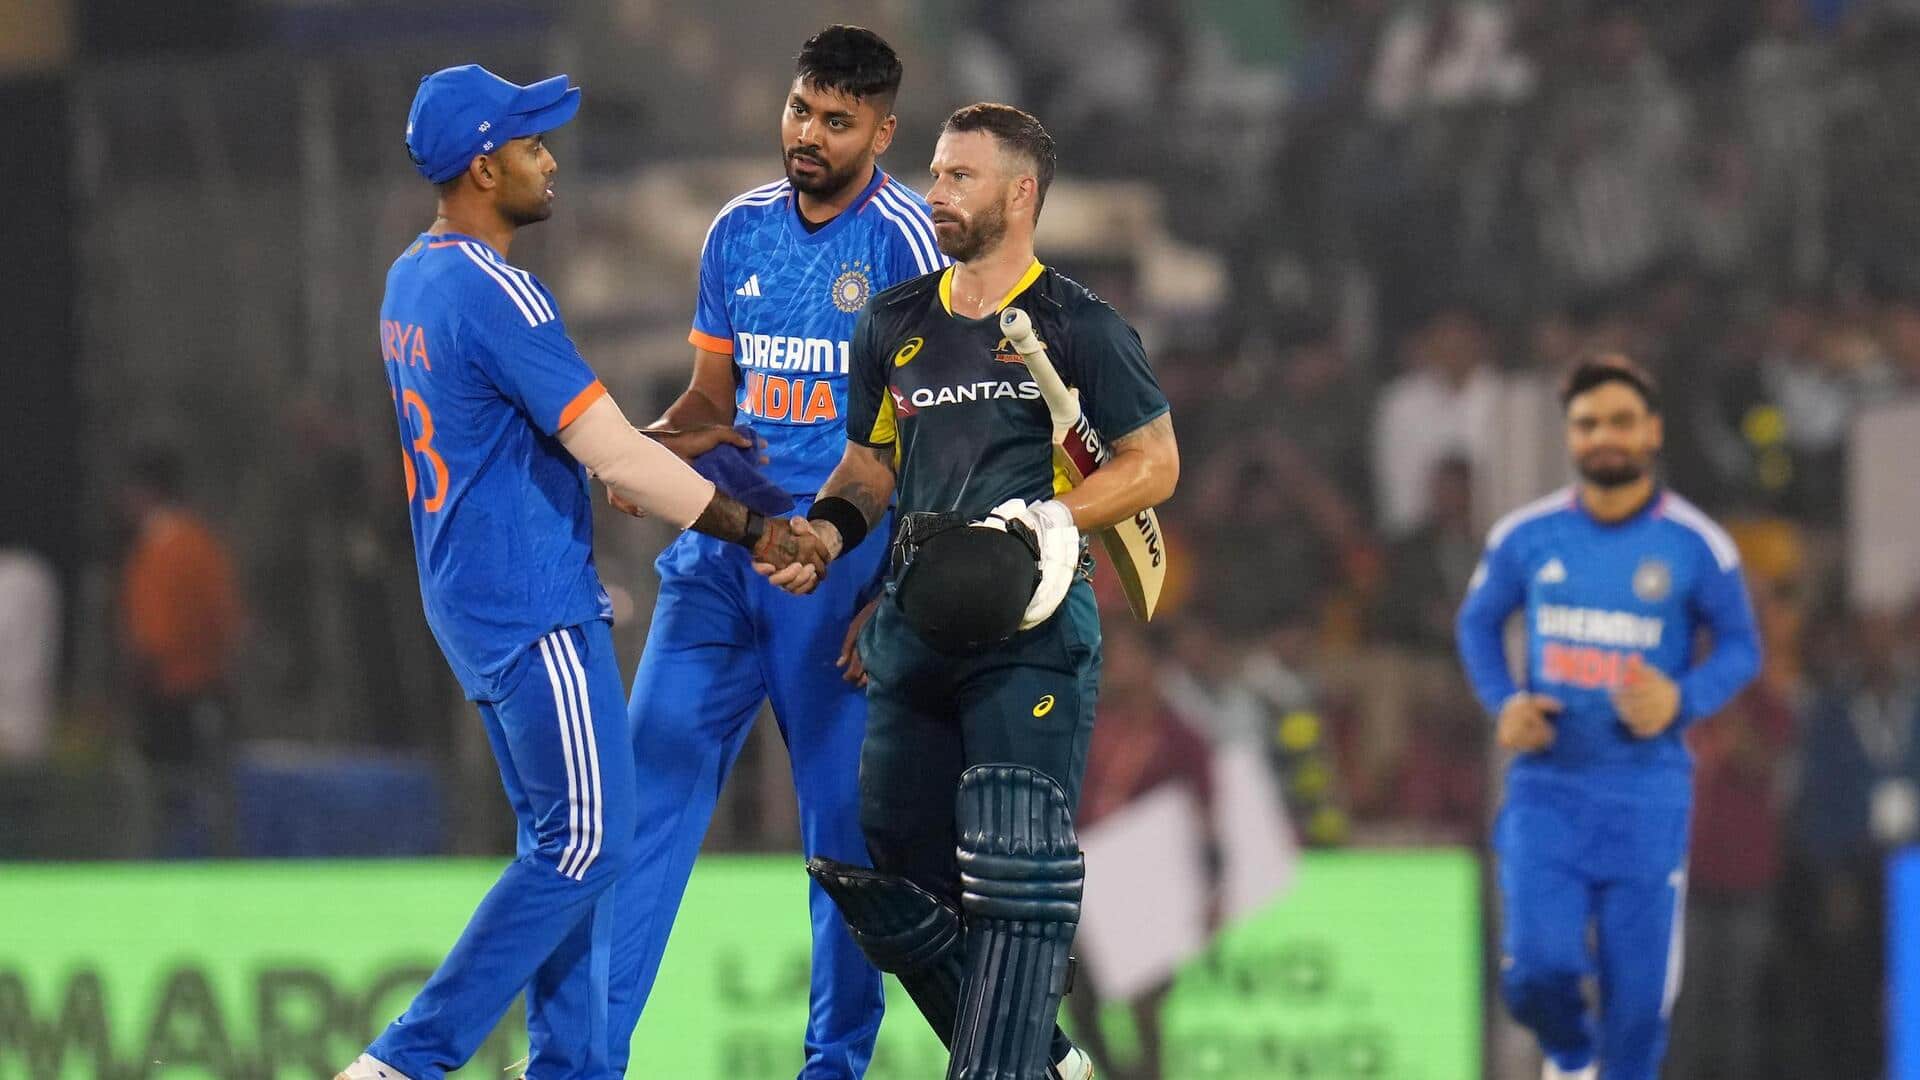 India vs Australia, 5th T20I: Preview, stats, and Dream11 predictions